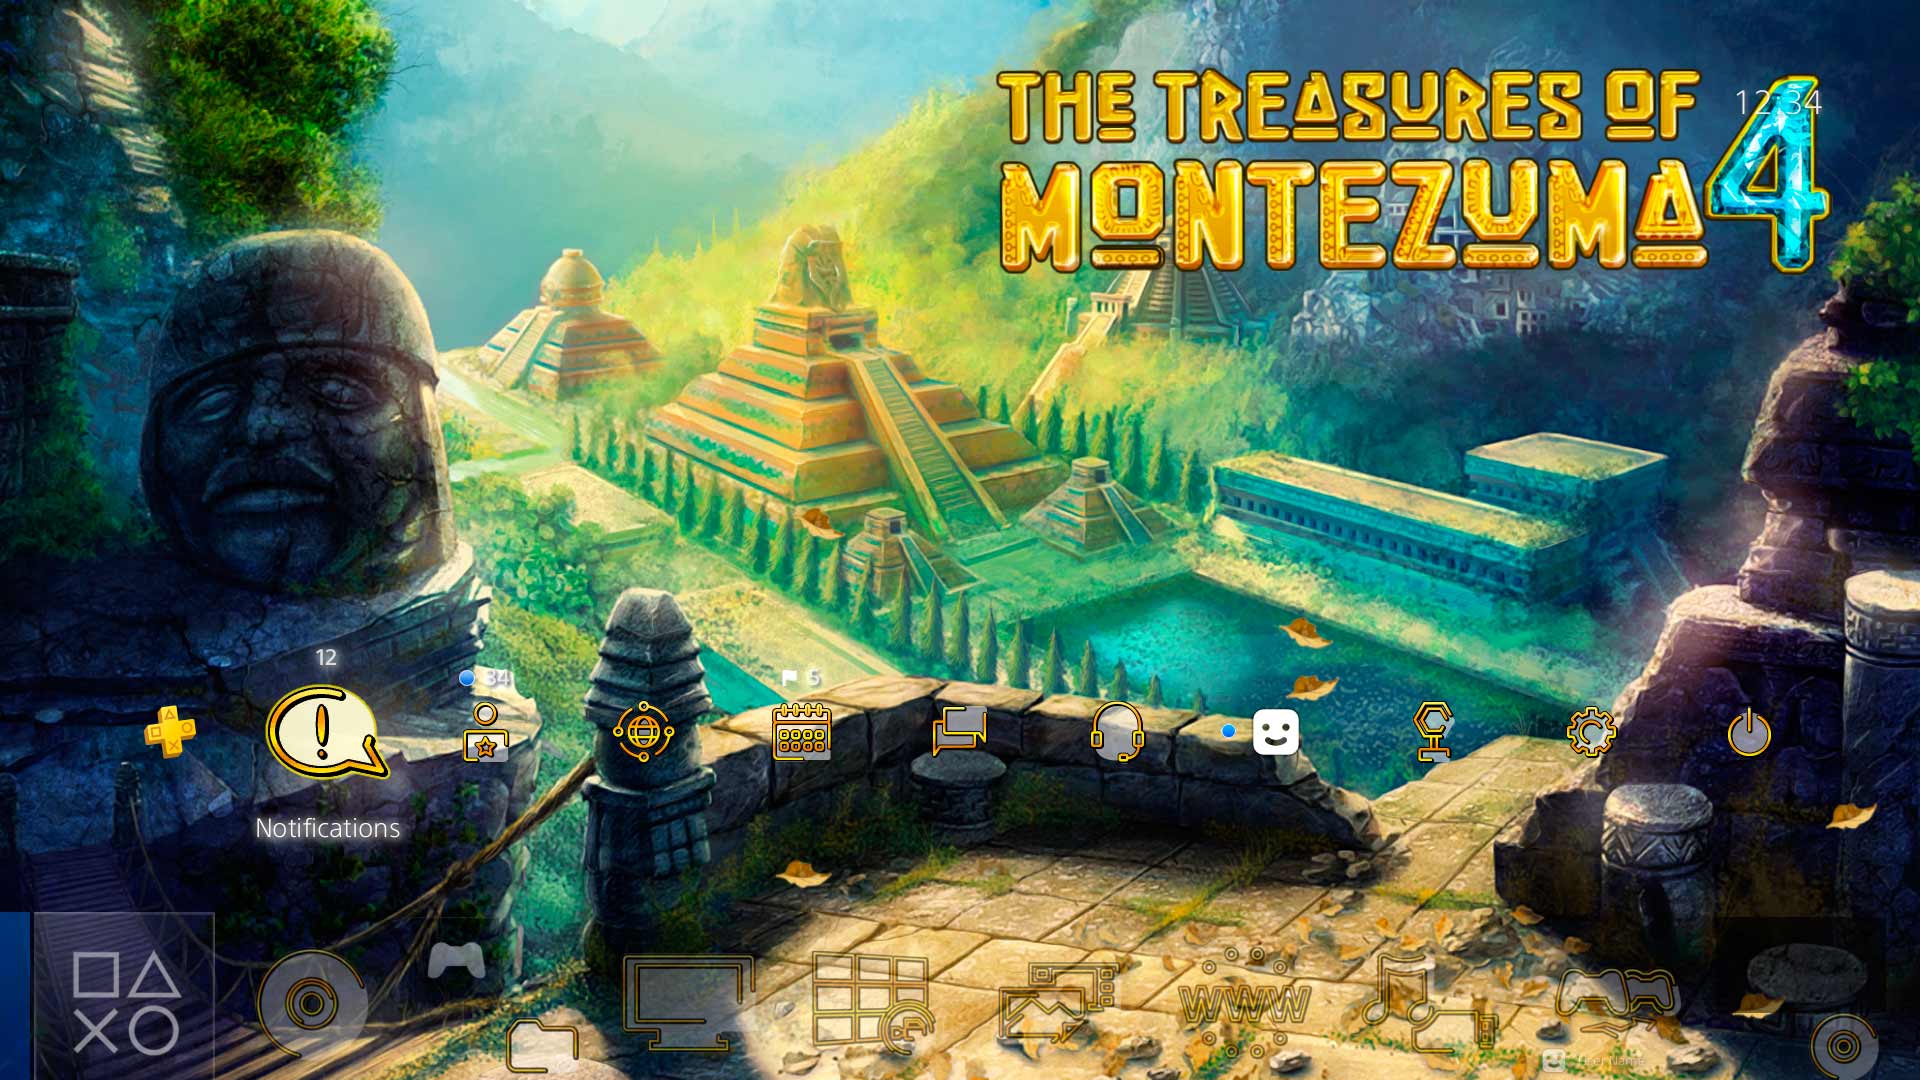 Сокровища надии игра на русском. The Treasures of Montezuma 2. Treasures of Montezuma: Arena PS Vita. The Treasures of Montezuma 4. The Treasures of Montezuma PSP.